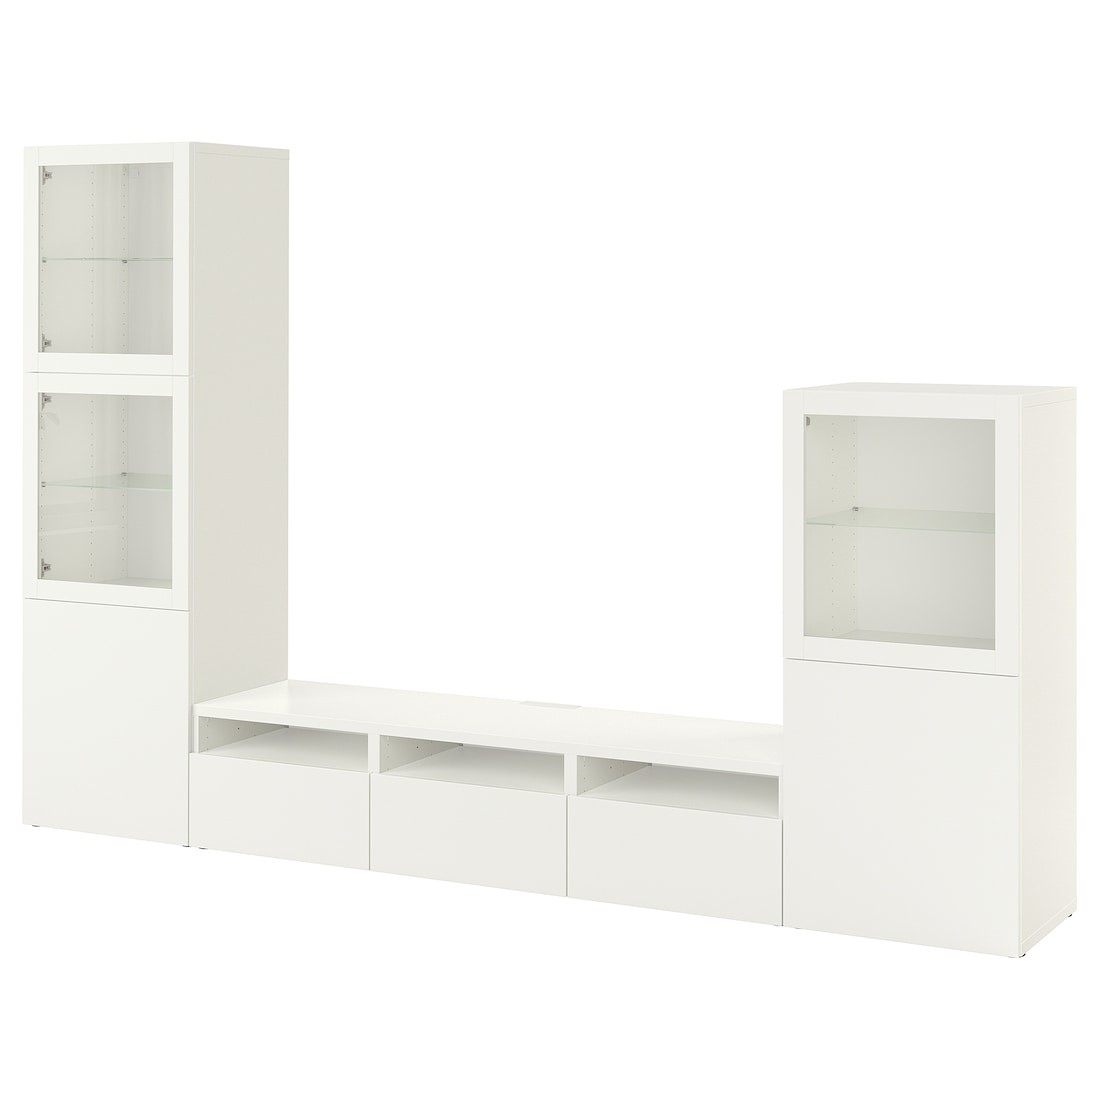 IKEA BESTÅ БЕСТО Комбинация для ТВ / стеклянные двери, белый / Lappviken белое стекло прозрачное, 300x42x193 см 69406385 694.063.85